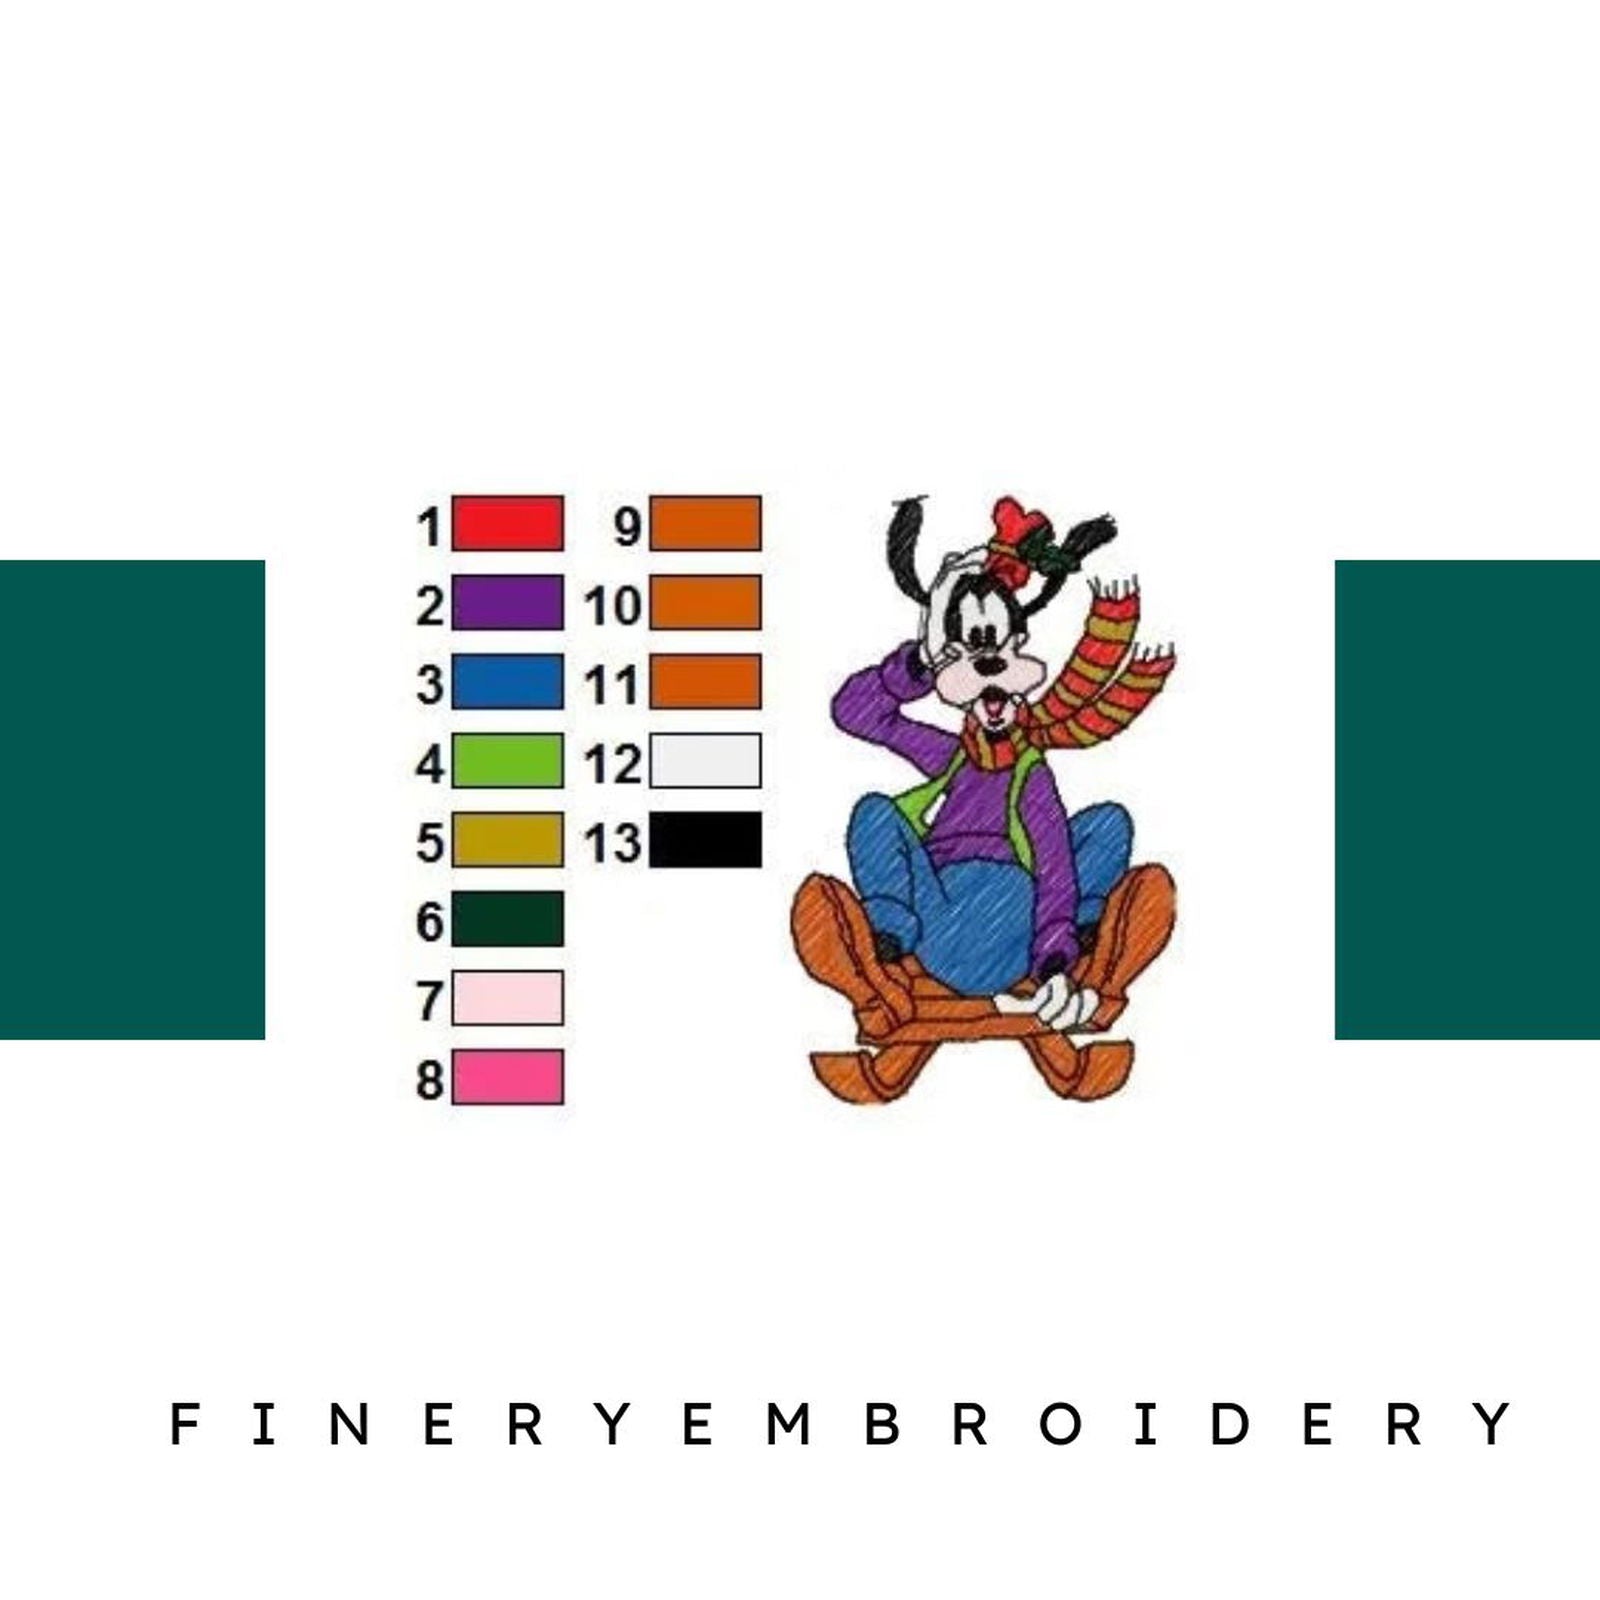 MICKEY MINNIE 017 - Embroidery Design - FineryEmbroidery